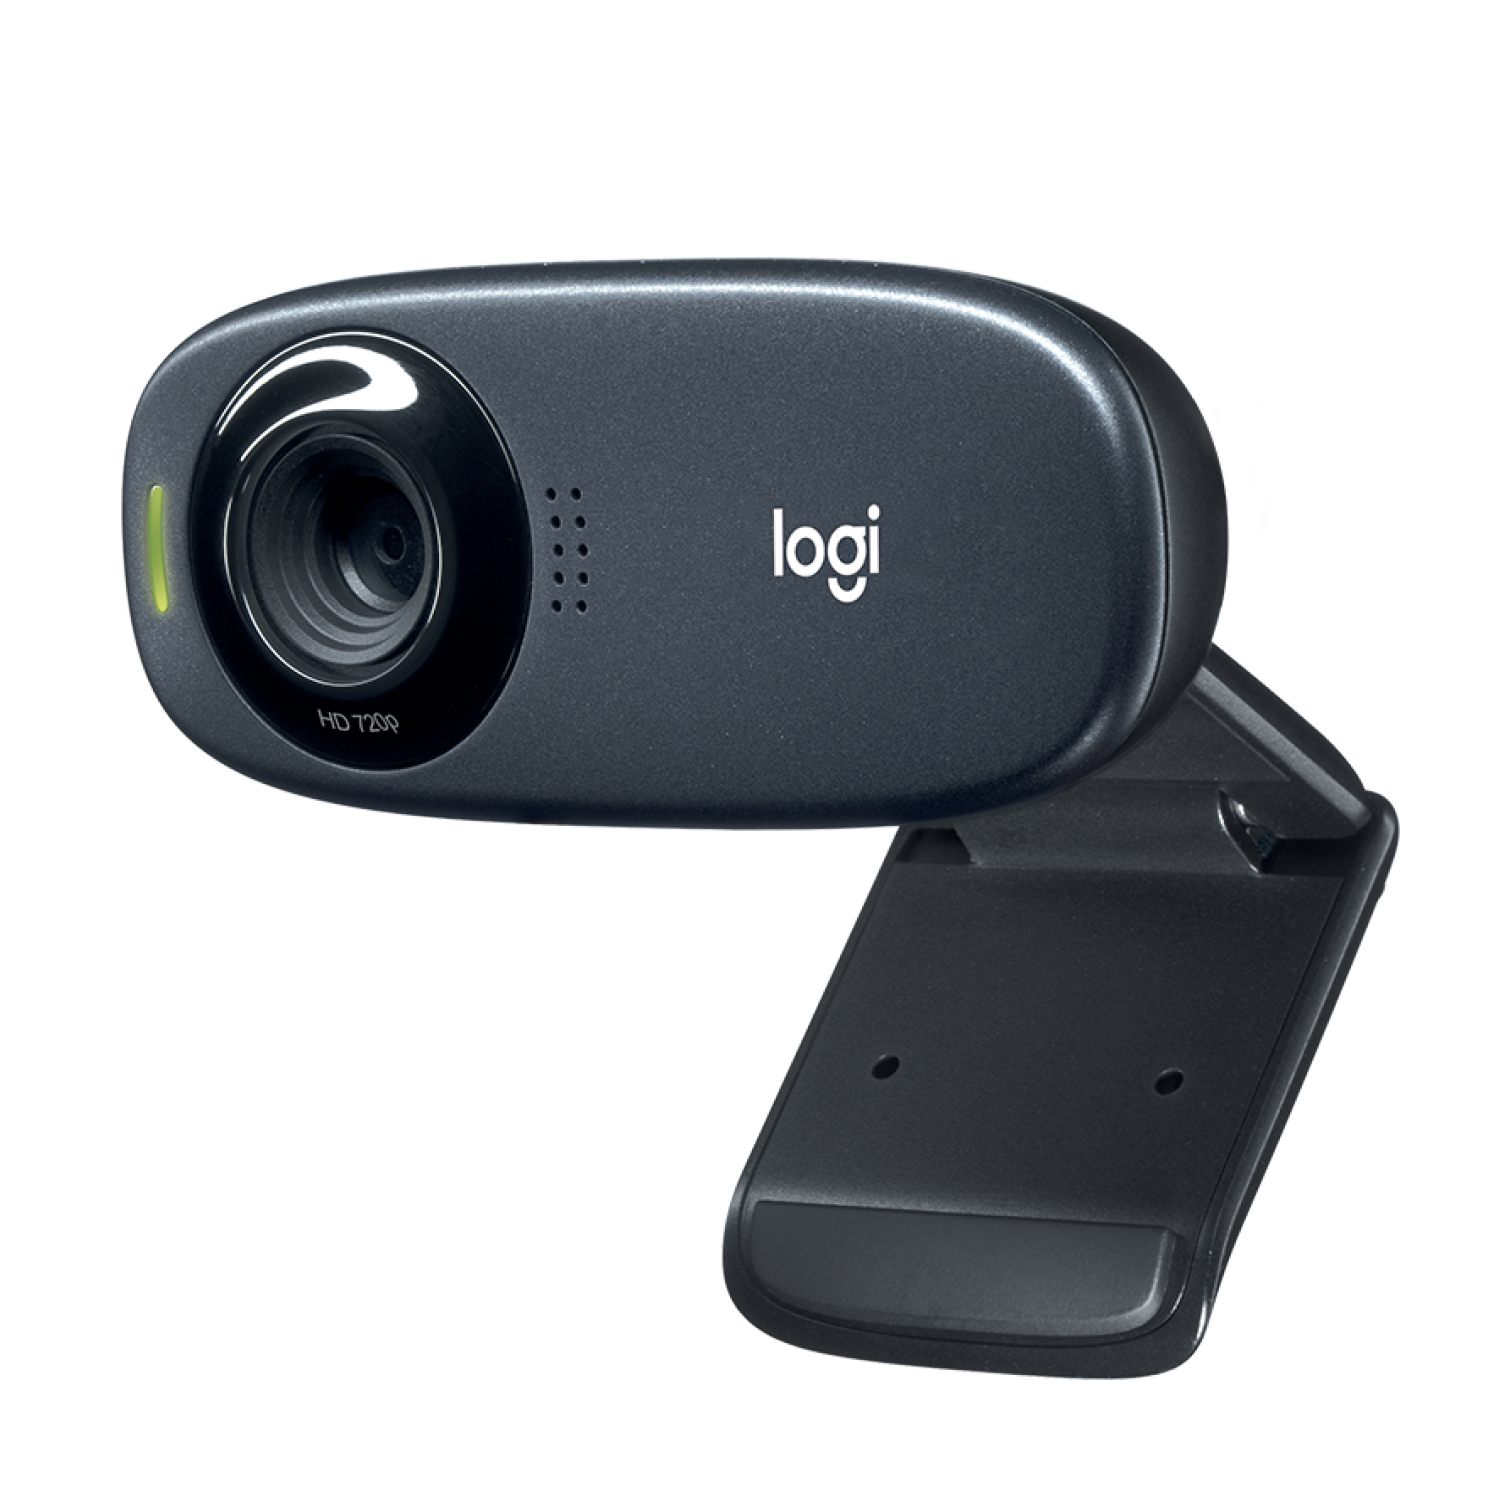 Вебкамера Logitech C310, 1.3 MP, 1280x720